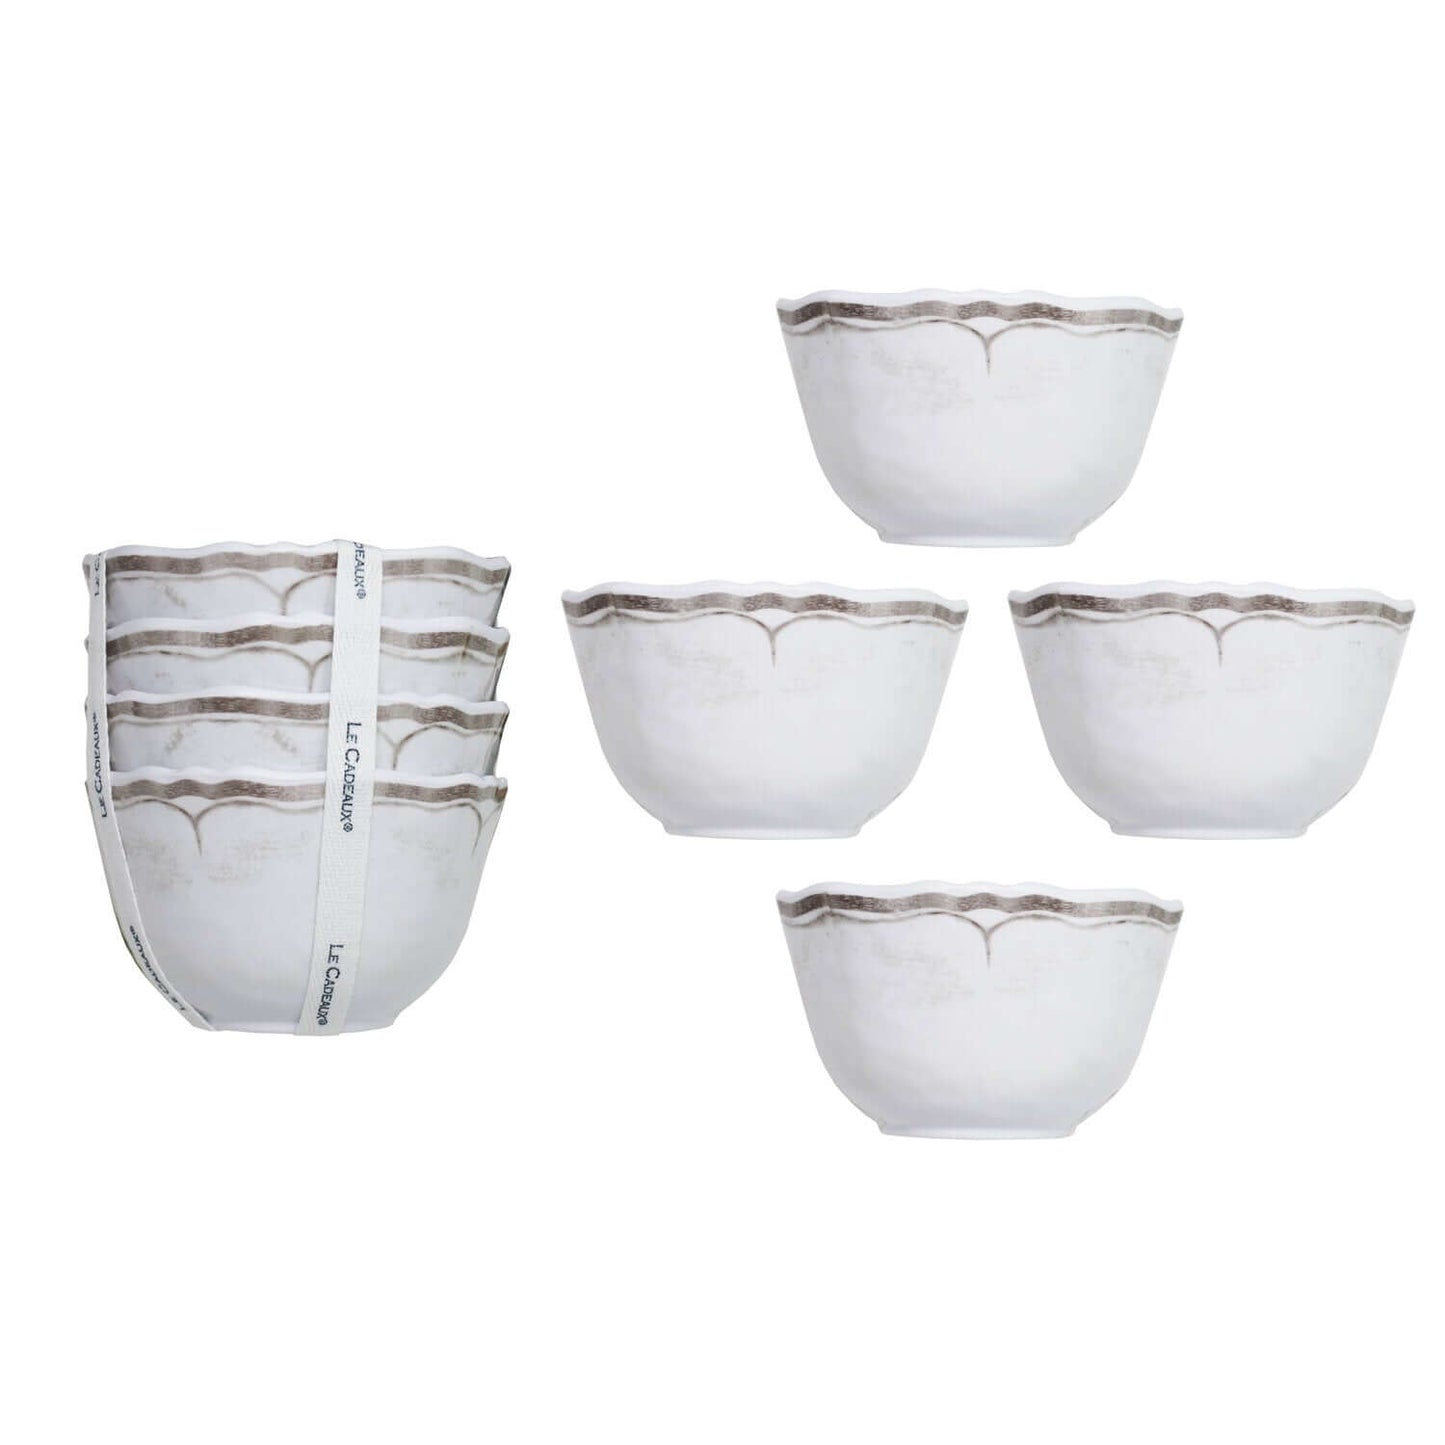 Rustica Antique White Dessert Bowls Set of 4 - Royalties